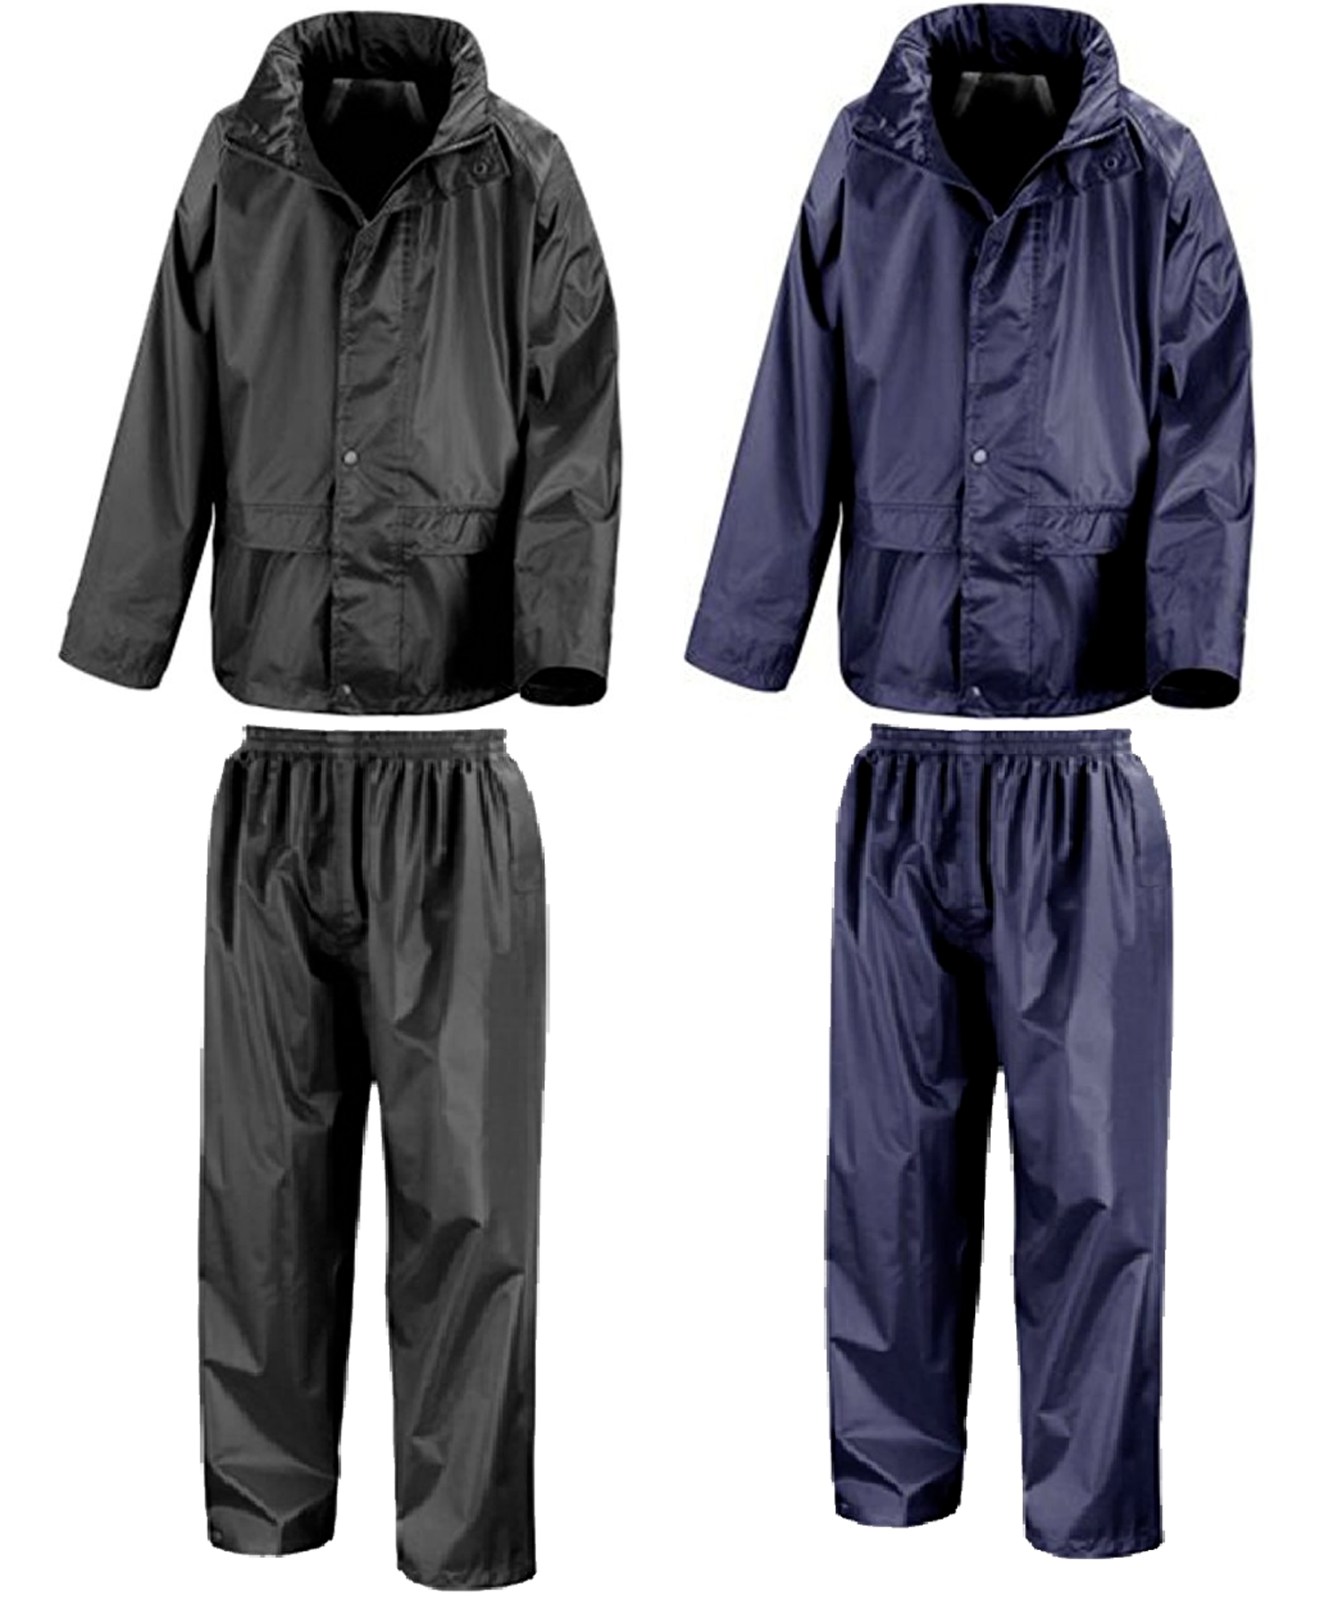 Fashionarie Club Adults Waterproof Rain Wear Zip Up Long Hooded Coat Unisex Long Sleeve Fishing Hiking Rain Jacket Work Wear Trousers